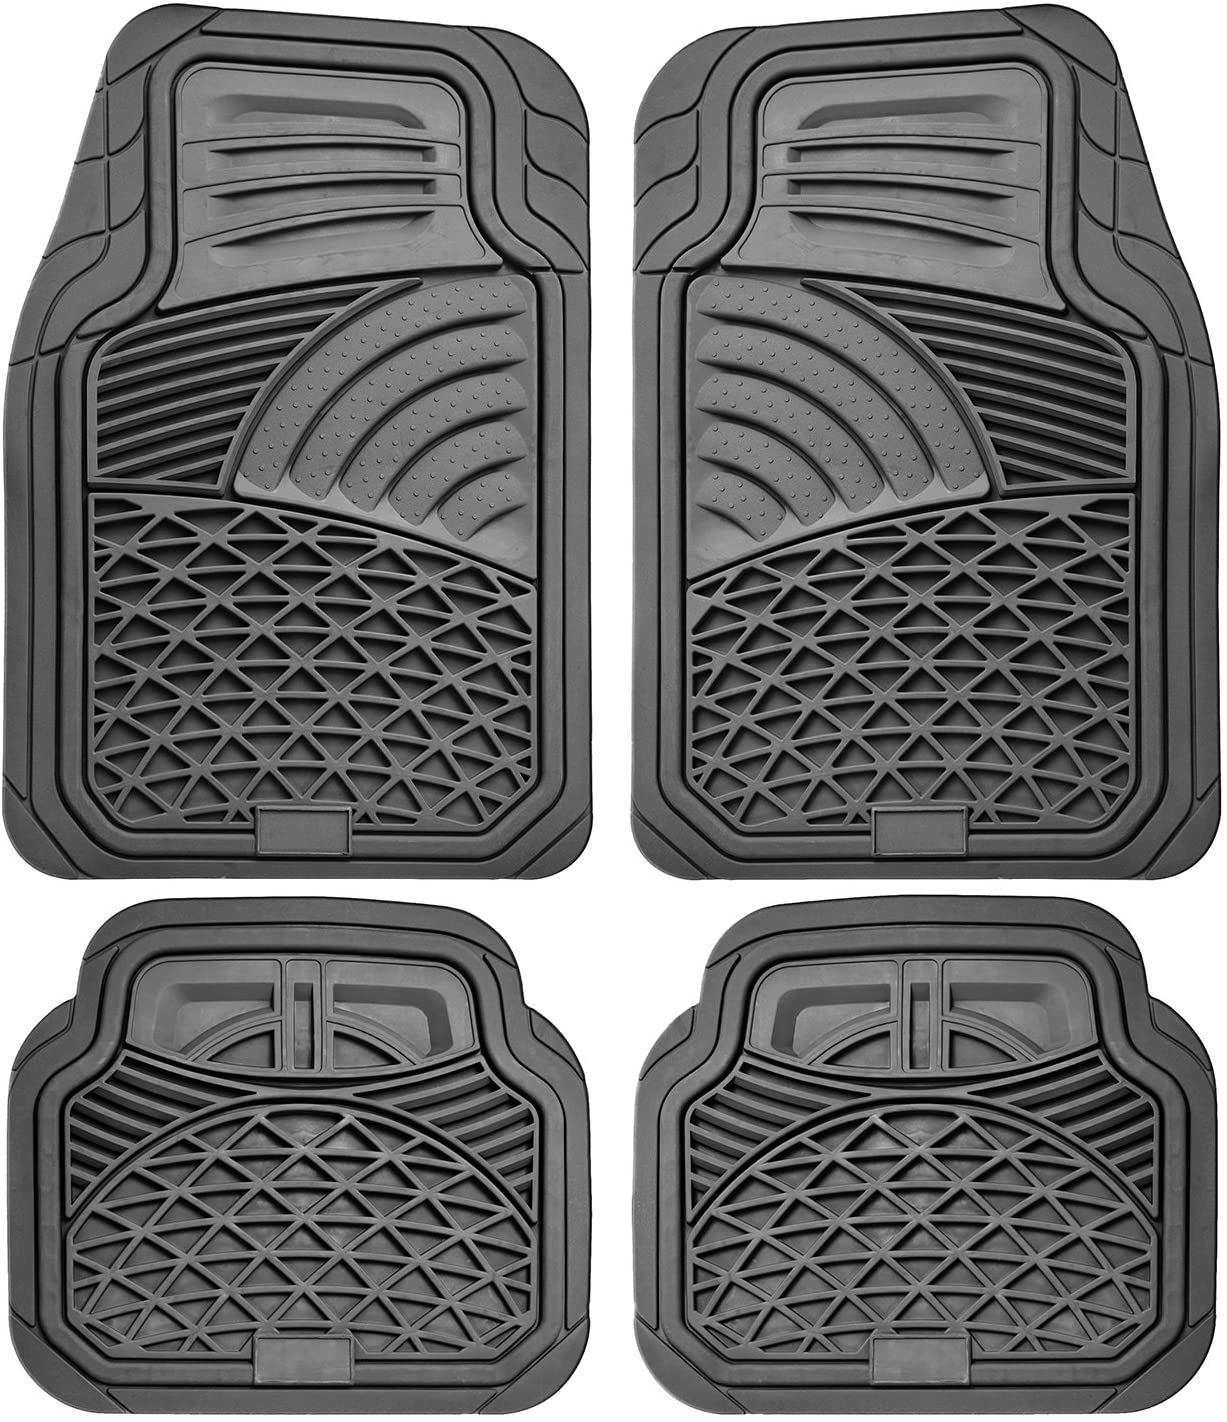 Motorup America Auto Floor Mats (4-Piece Set) All Season Rubber - Fits Select Vehicles Car Truck Van SUV, Shell Black